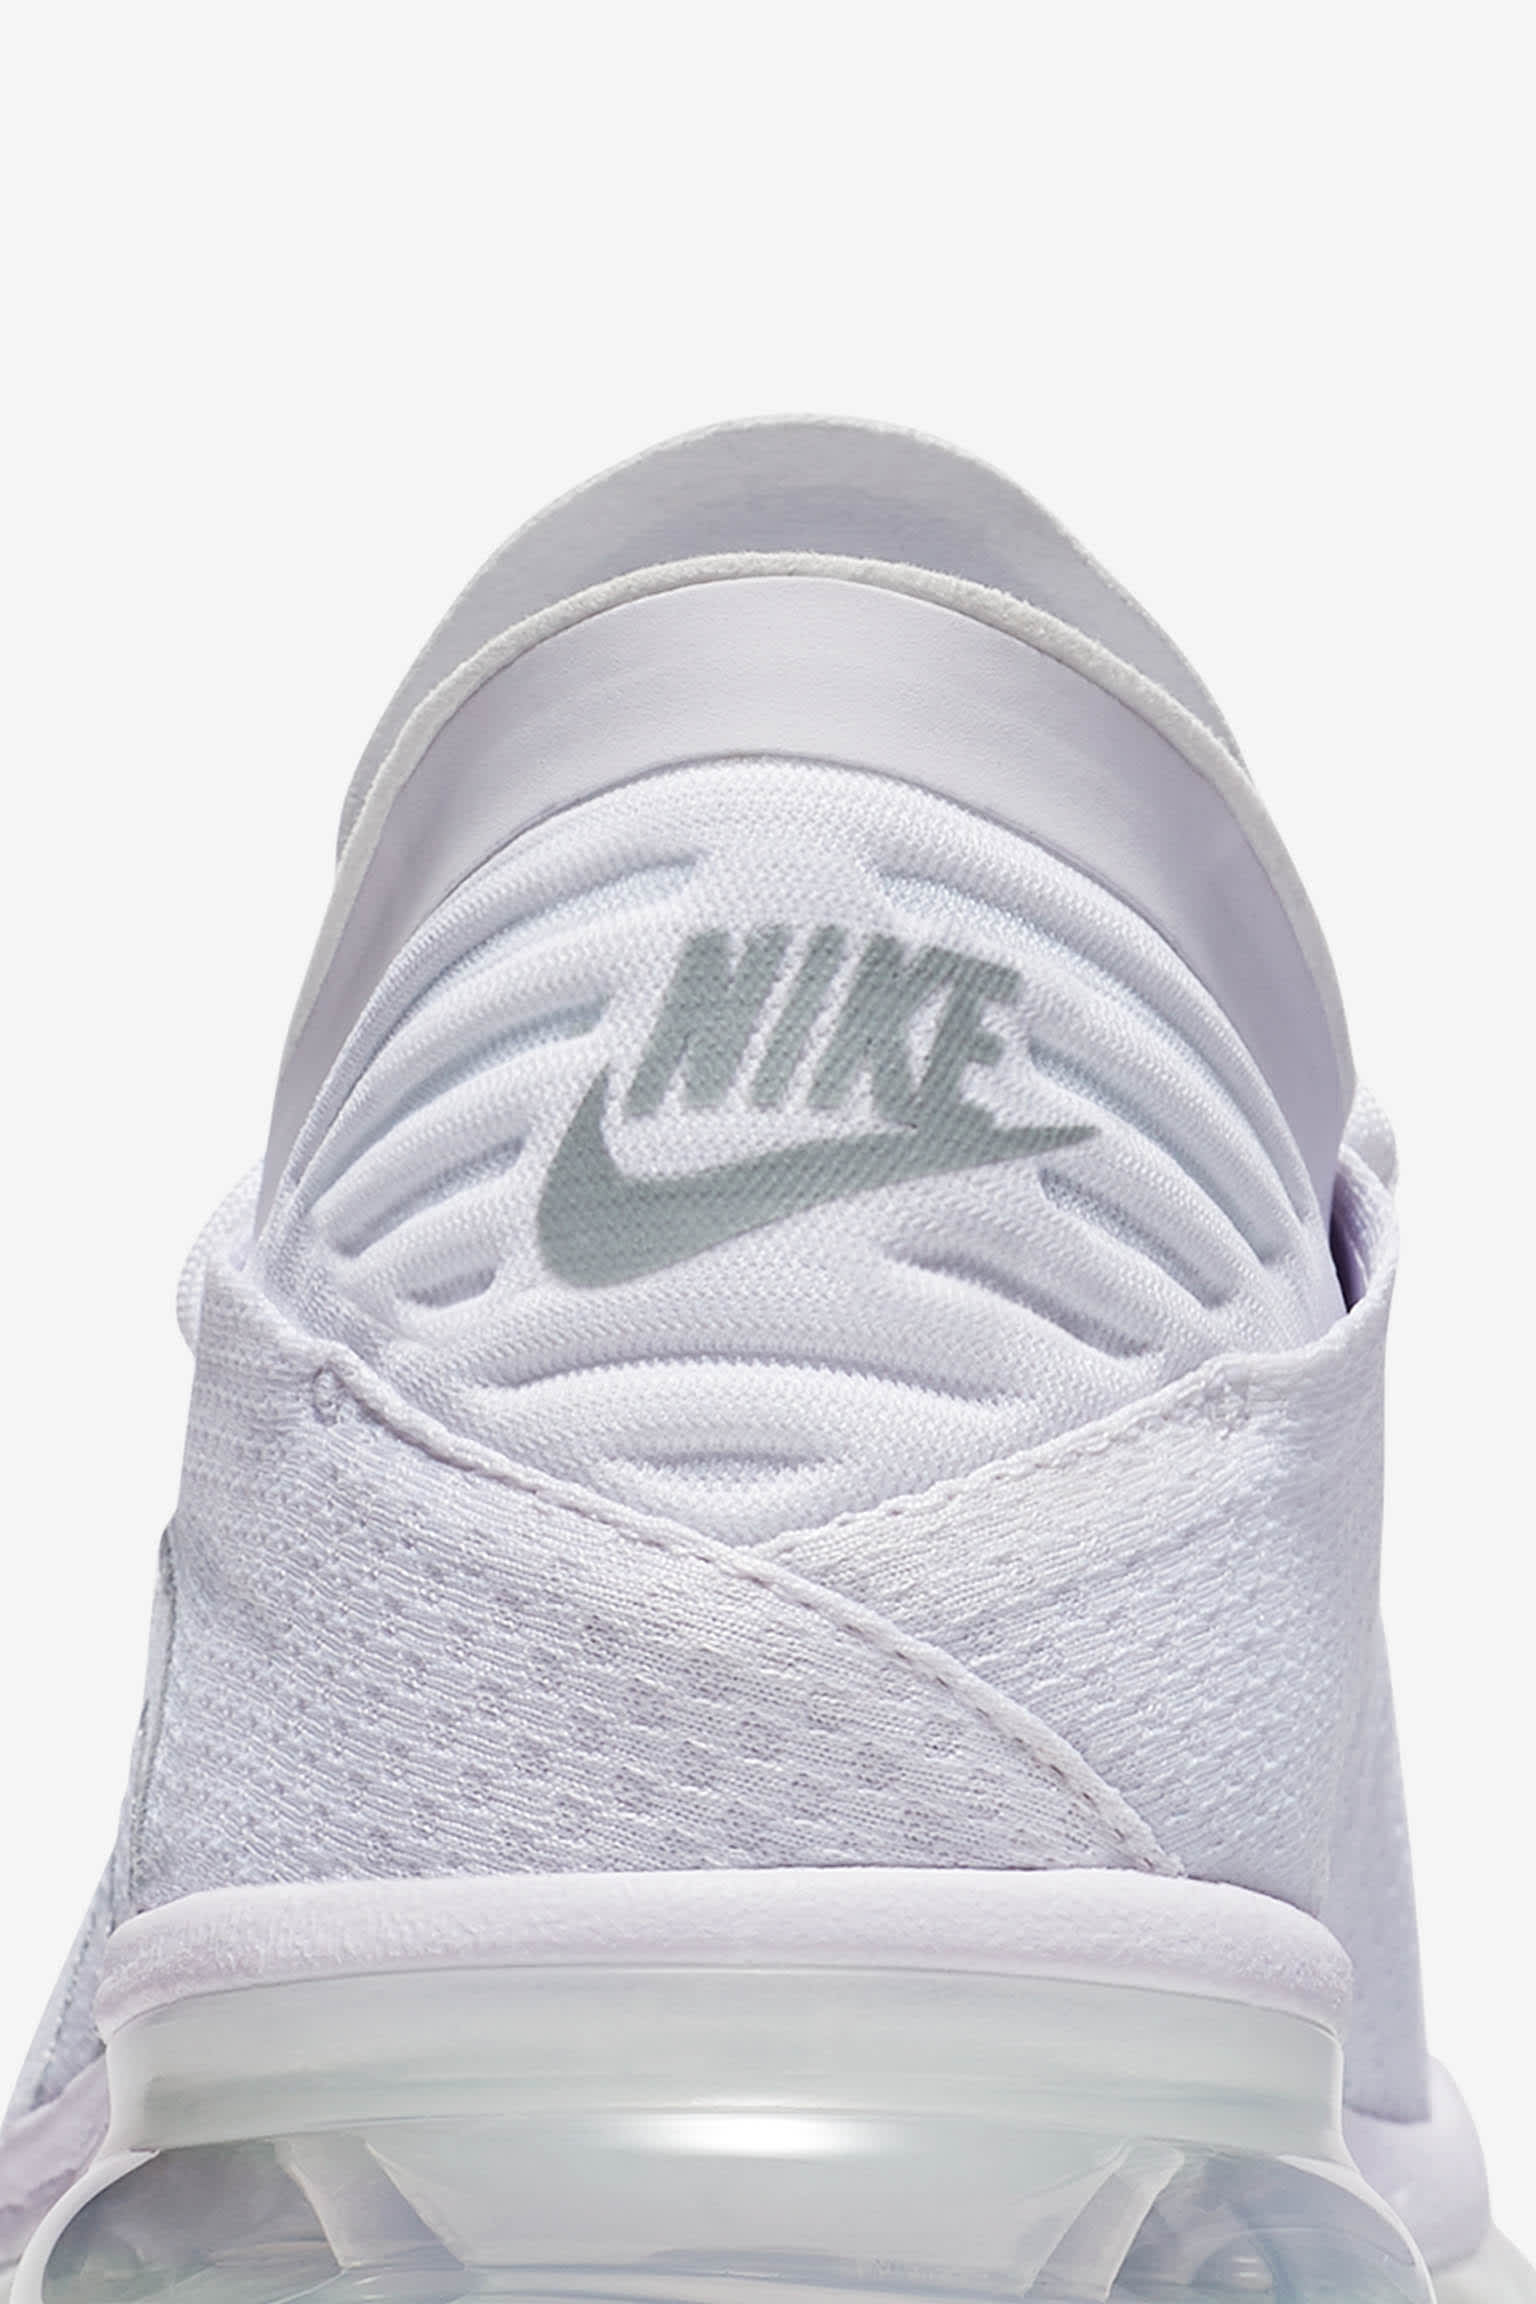 Nike Air Max Flair 'White & Pure Platinum' Release Date. Nike SNKRS